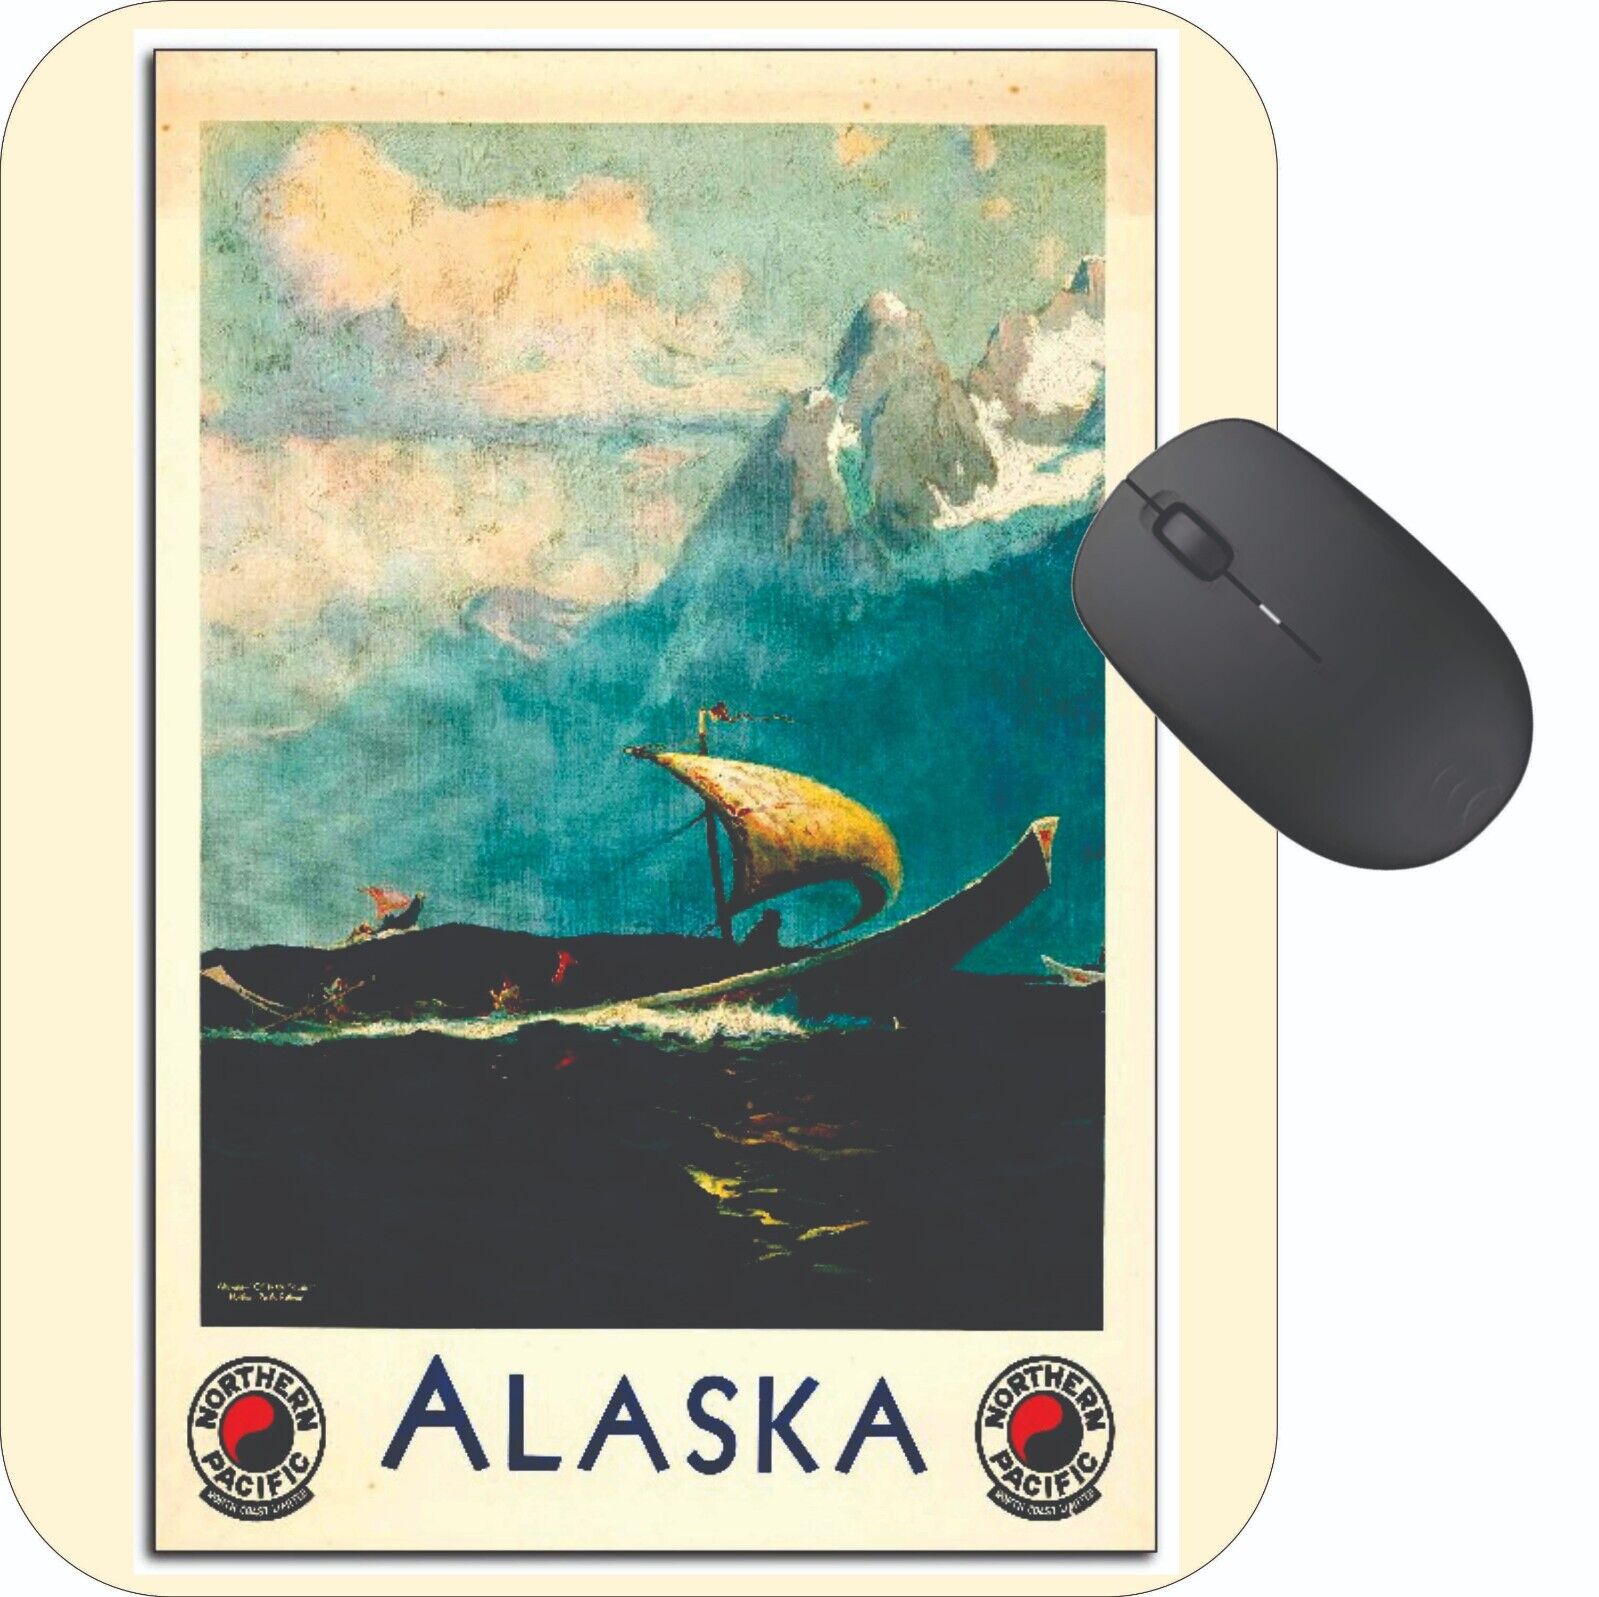 Alaska Mouse Pad Stunning Photos Travel Poster Art Vintage Retro 1930s